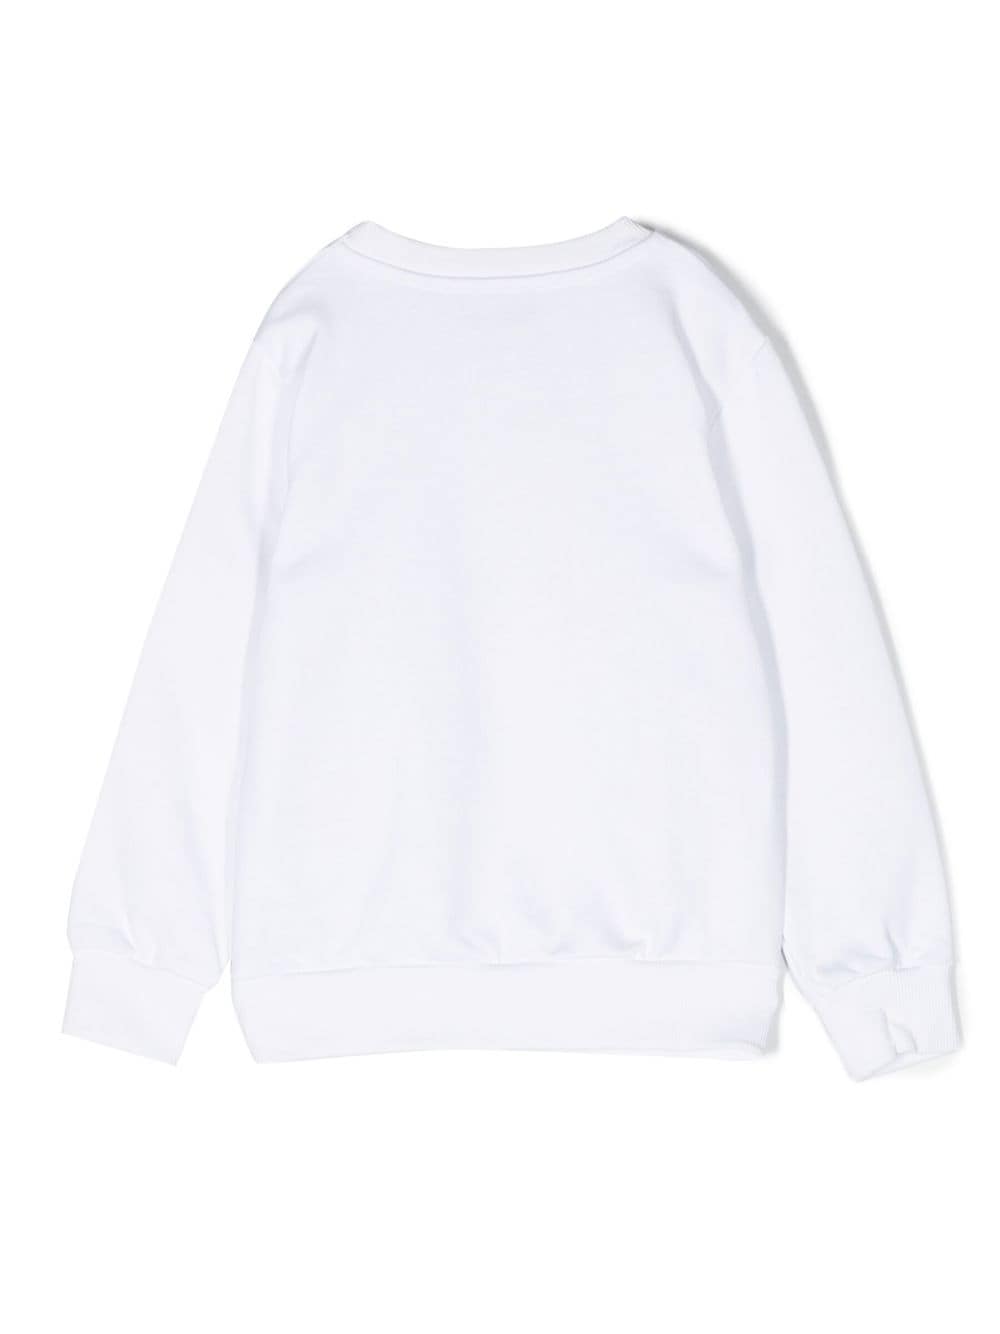 White sweatshirt for children with print